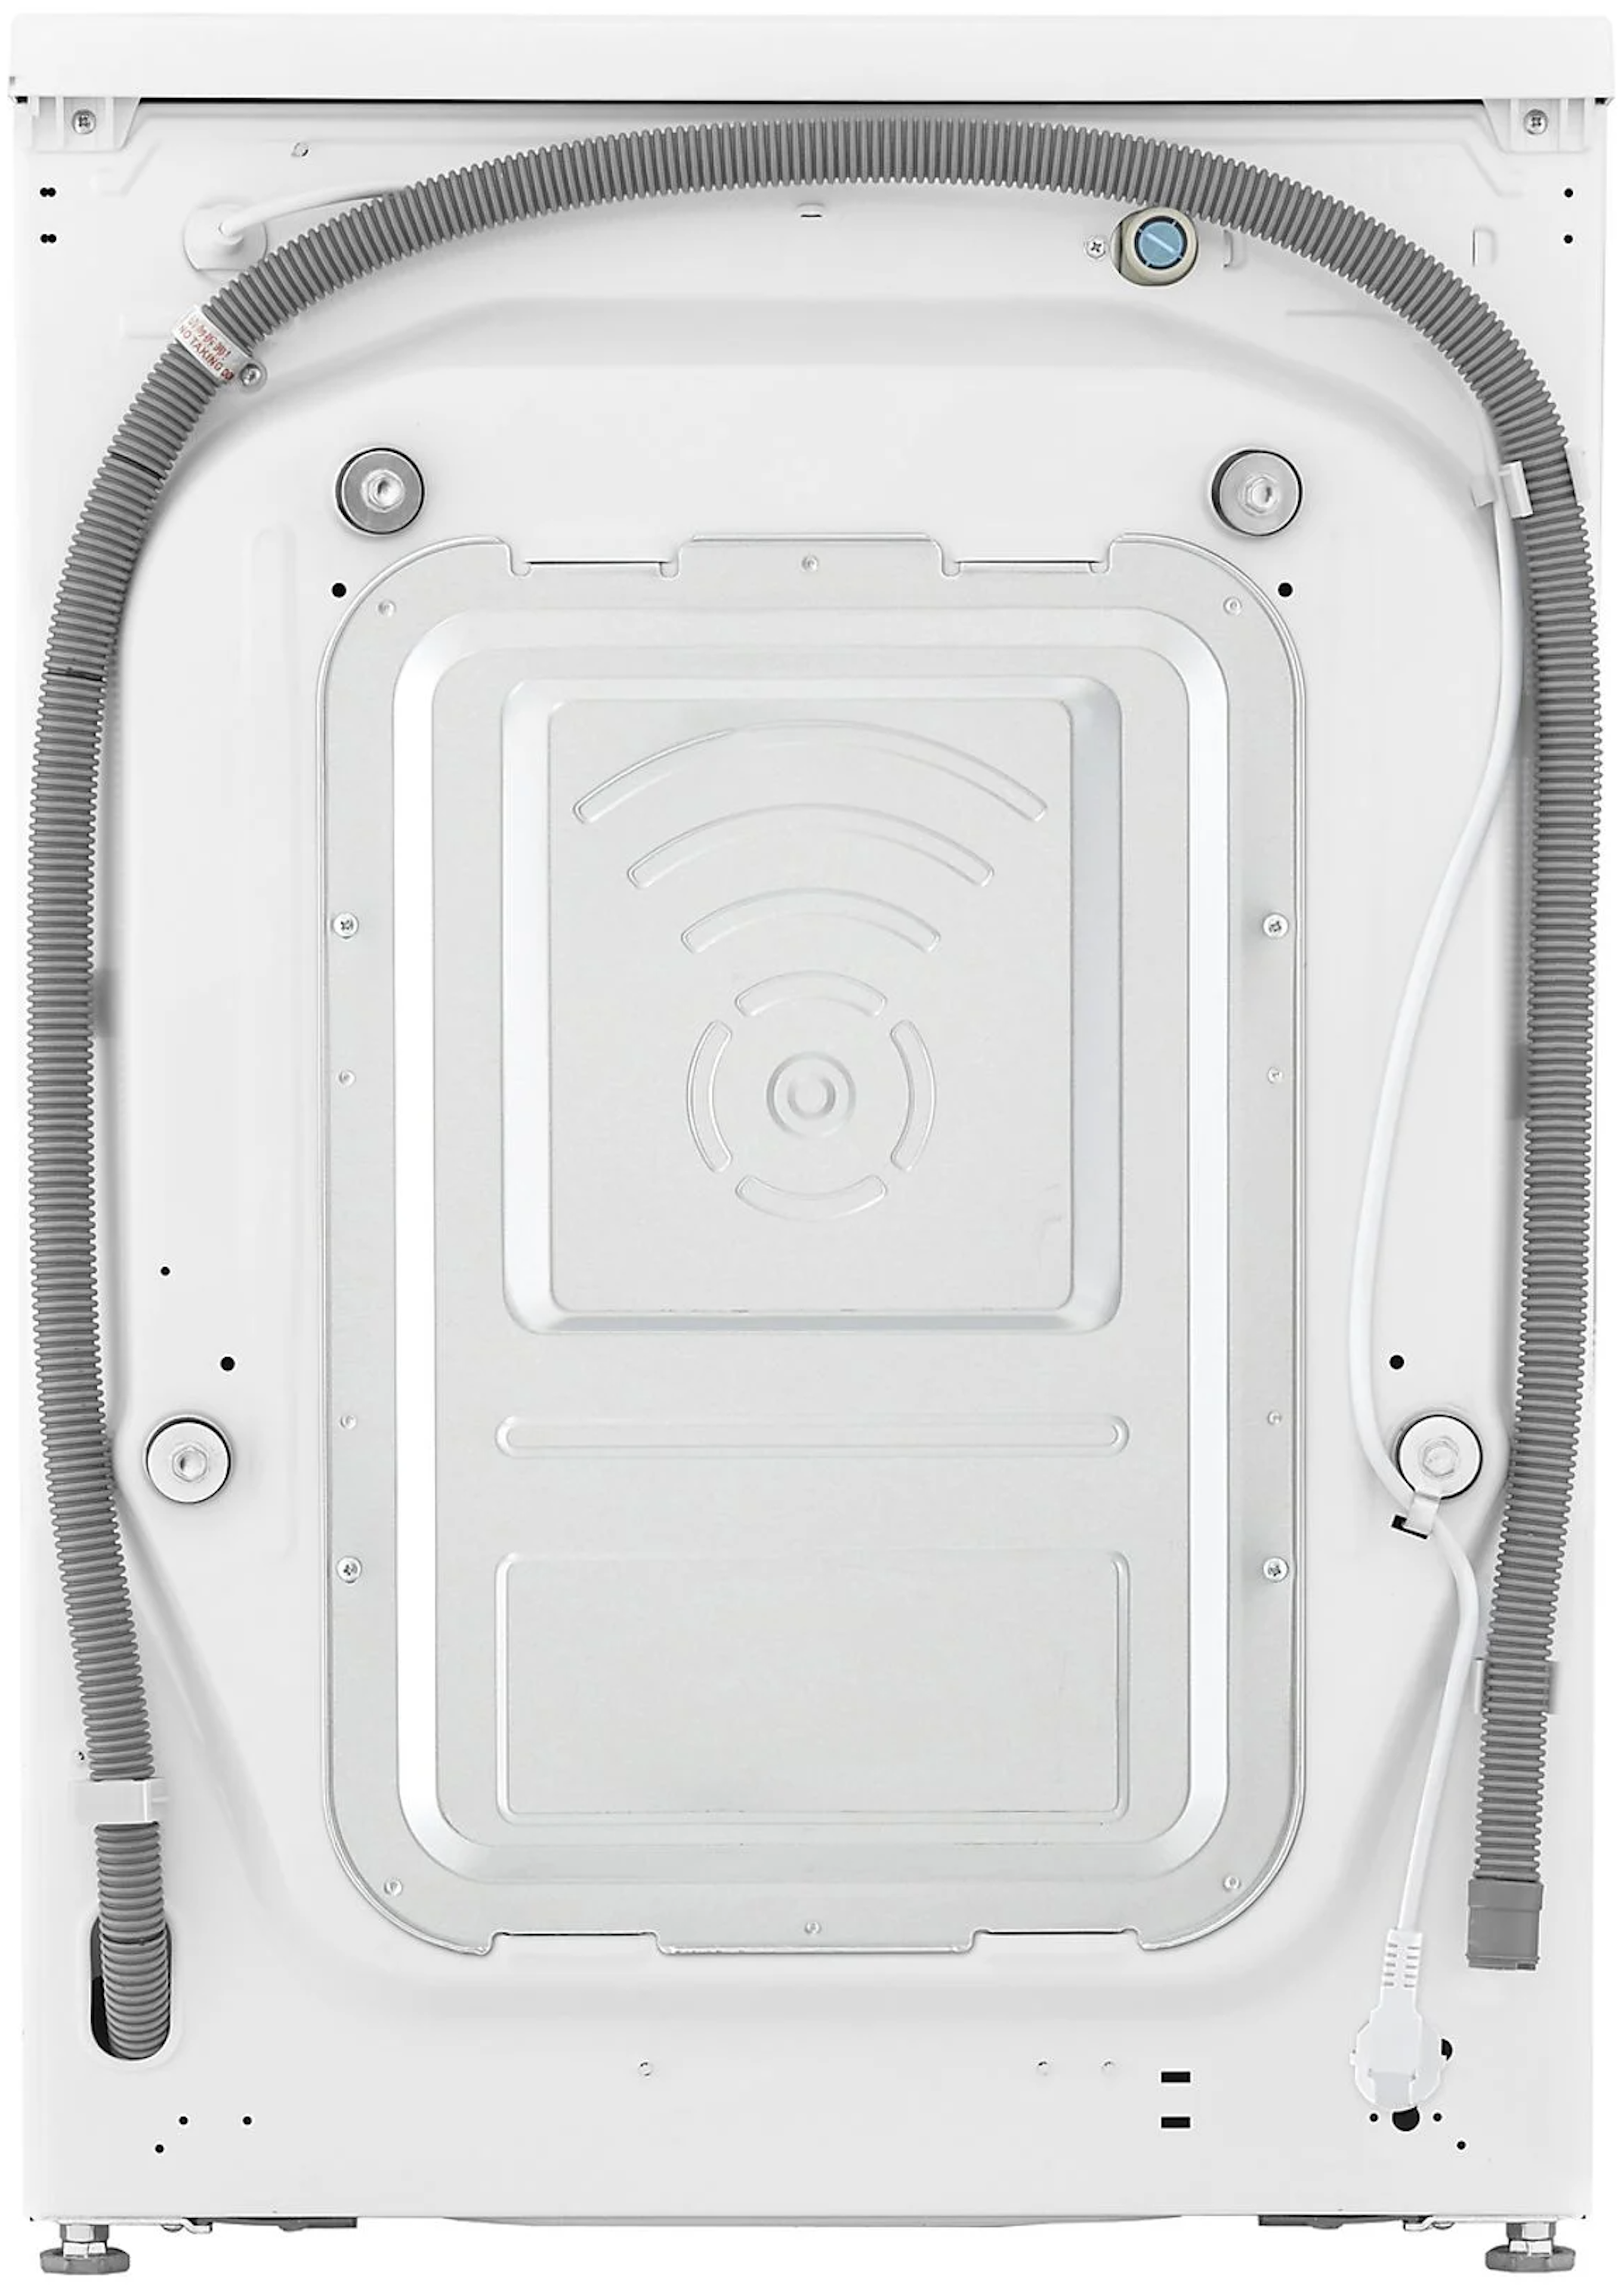 LG F4DR9537S2W  wasmachine afbeelding 5